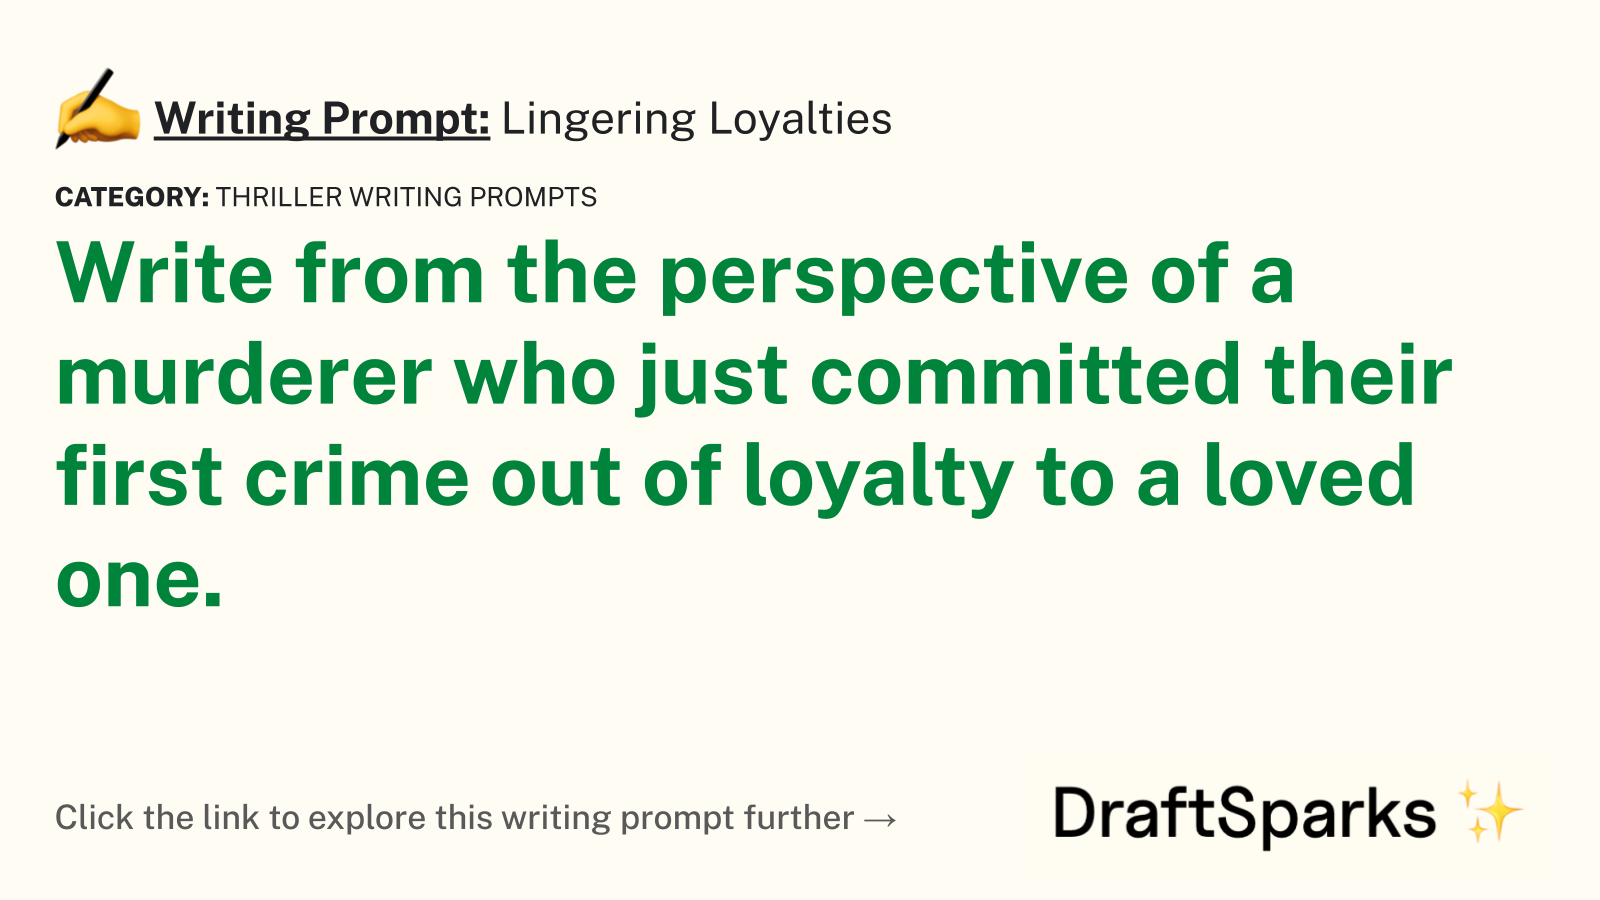 Lingering Loyalties